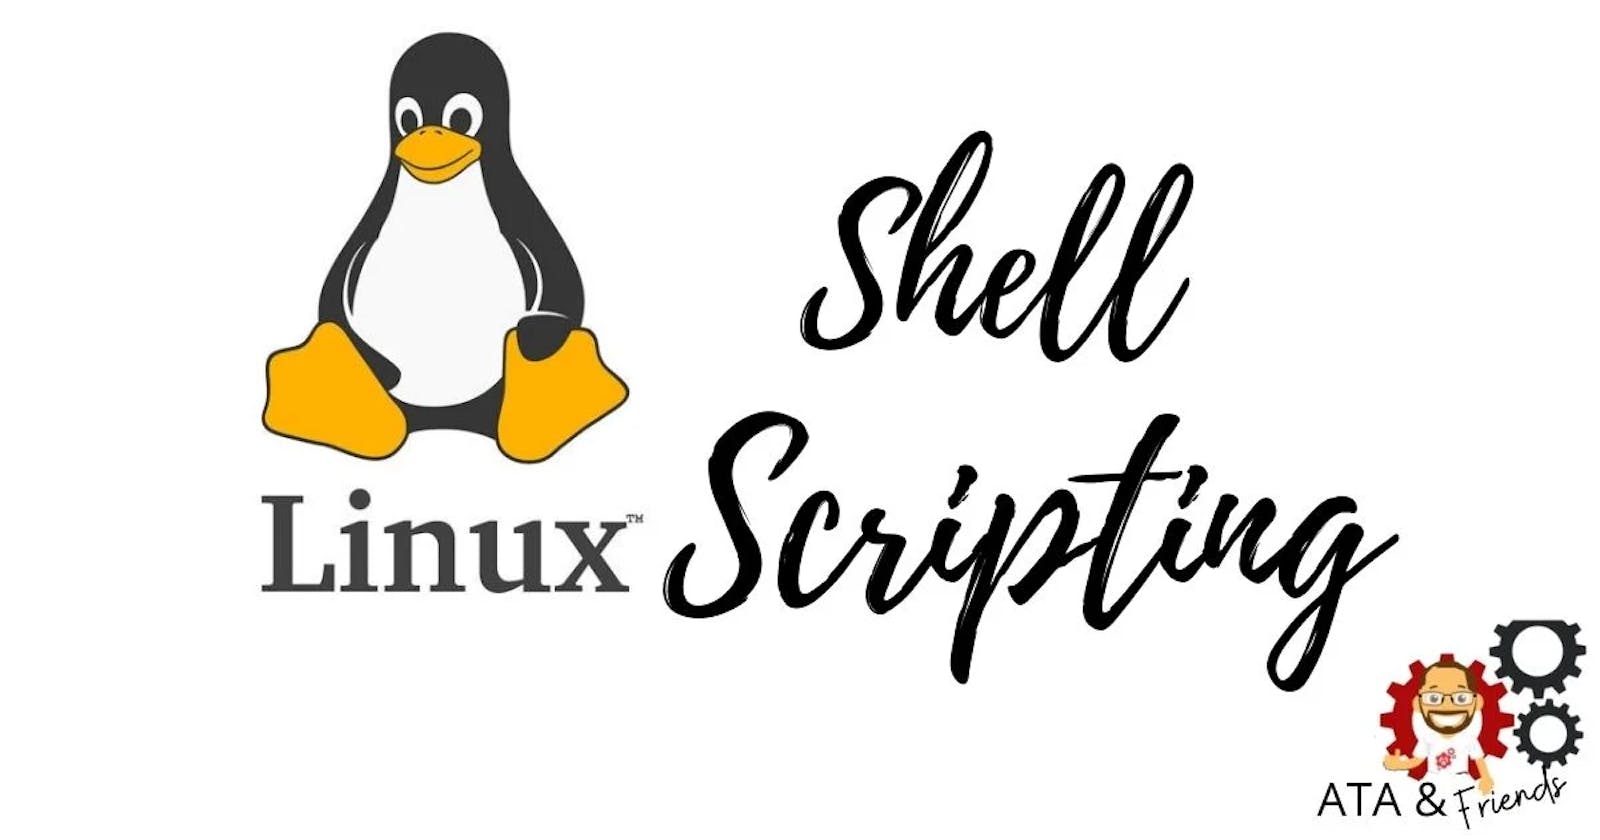 Day 4 Task: Basic Linux Shell Scripting for DevOps Engineers.

What is Kernel